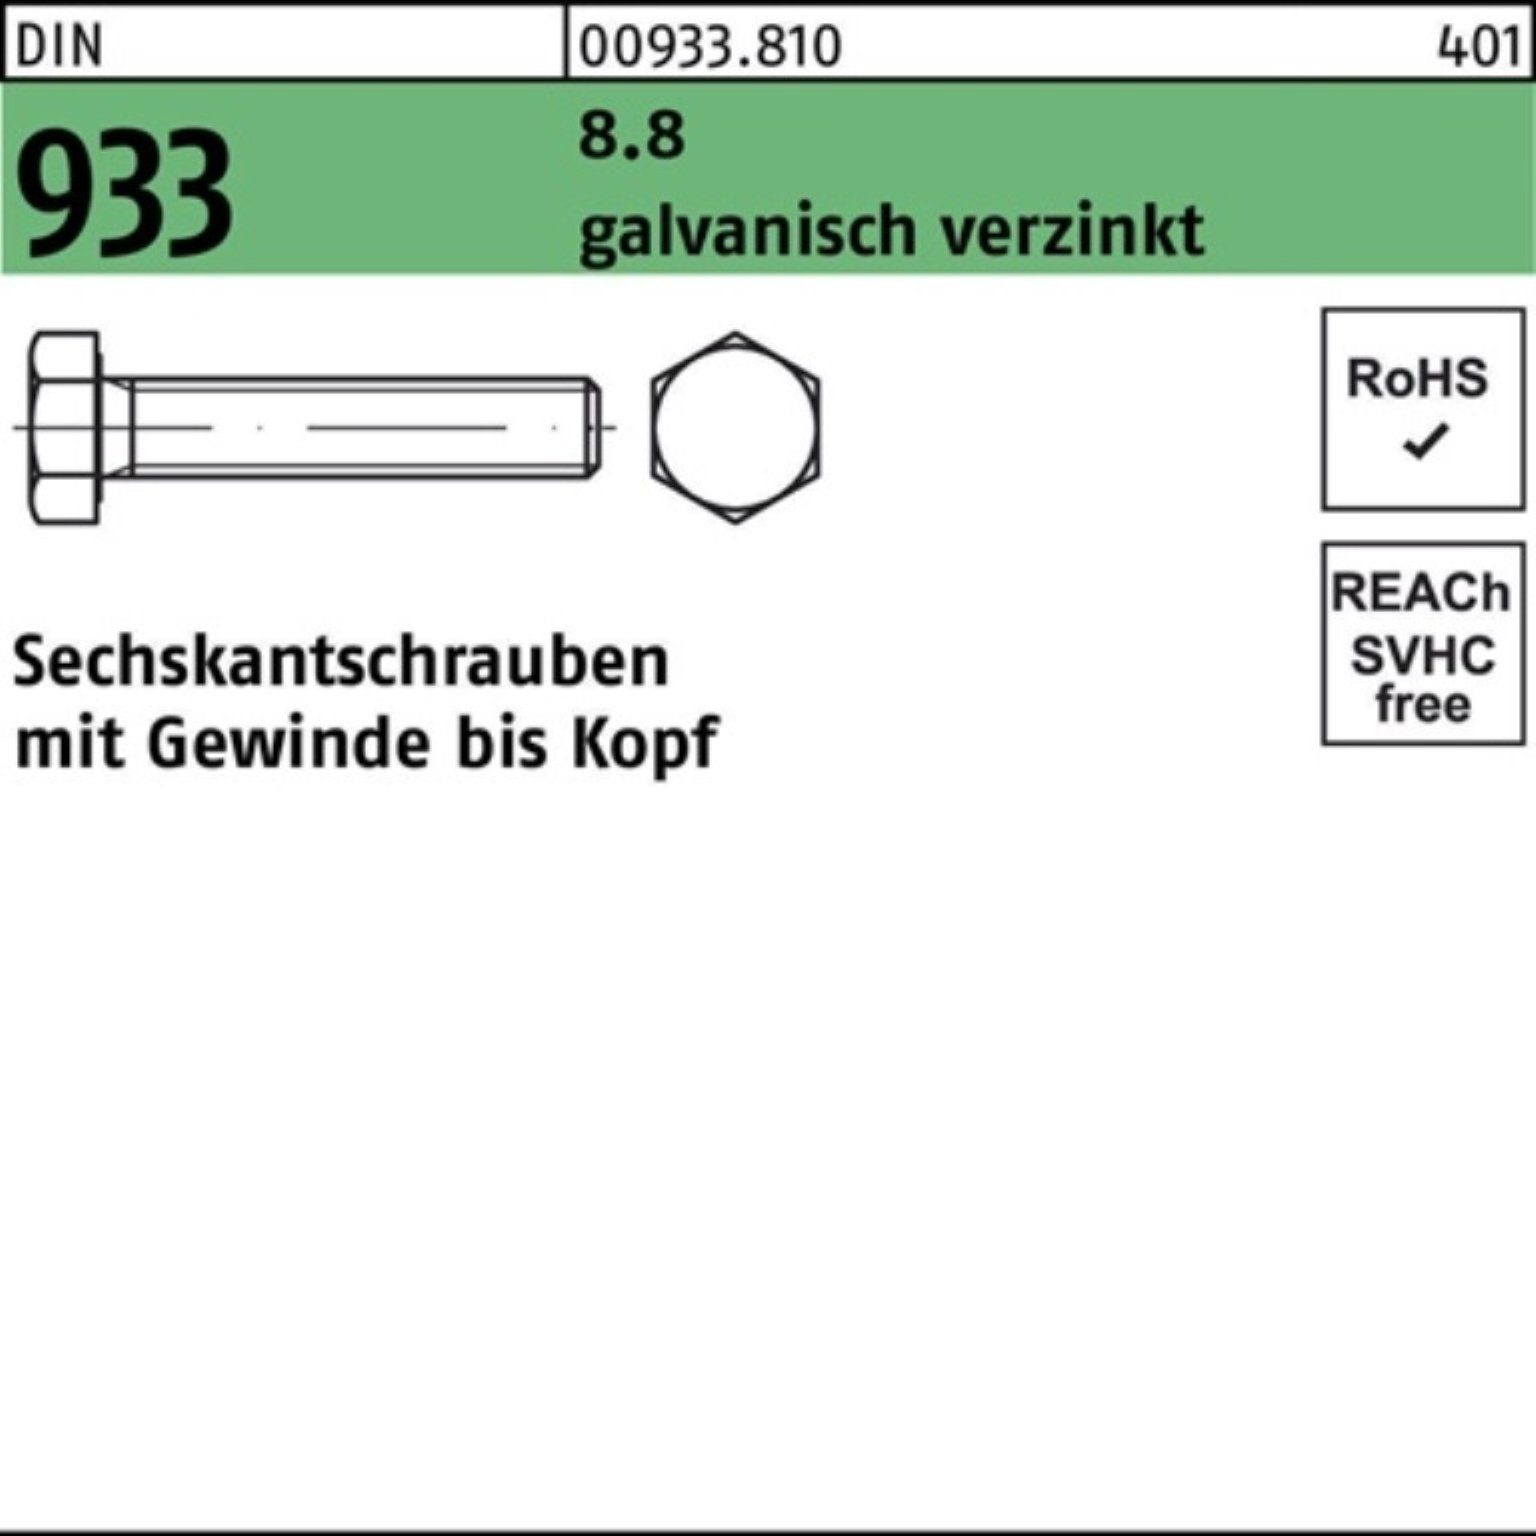 Reyher Sechskantschraube 500er 933 8.8 DIN Pack 5 VG 500 Stüc M3x Sechskantschraube galv.verz.